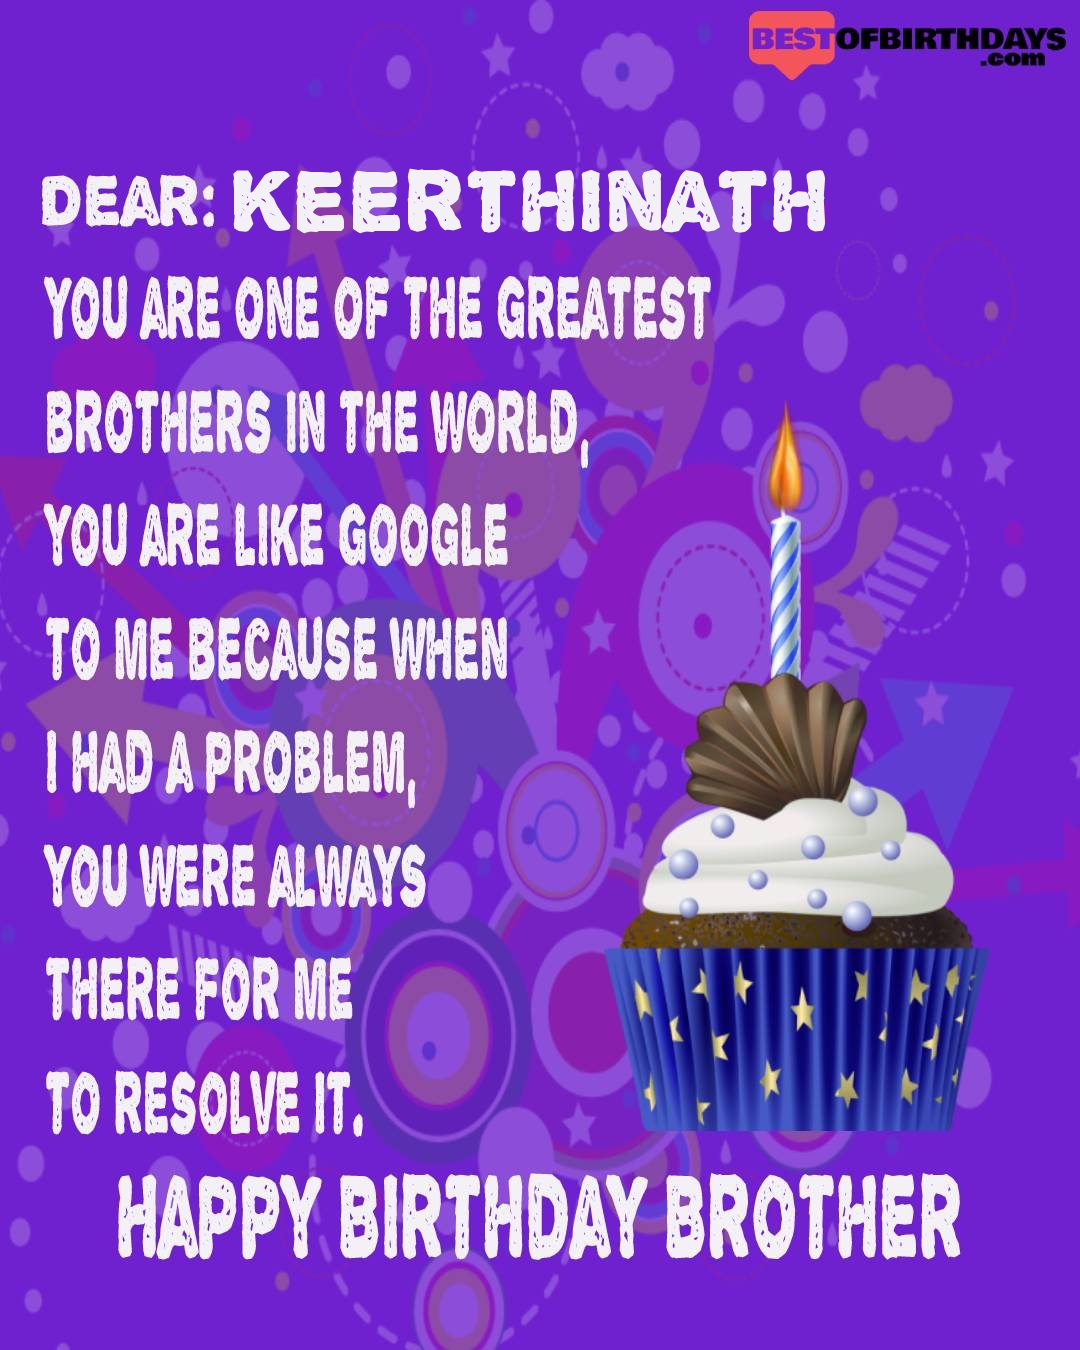 Happy birthday keerthinath bhai brother bro